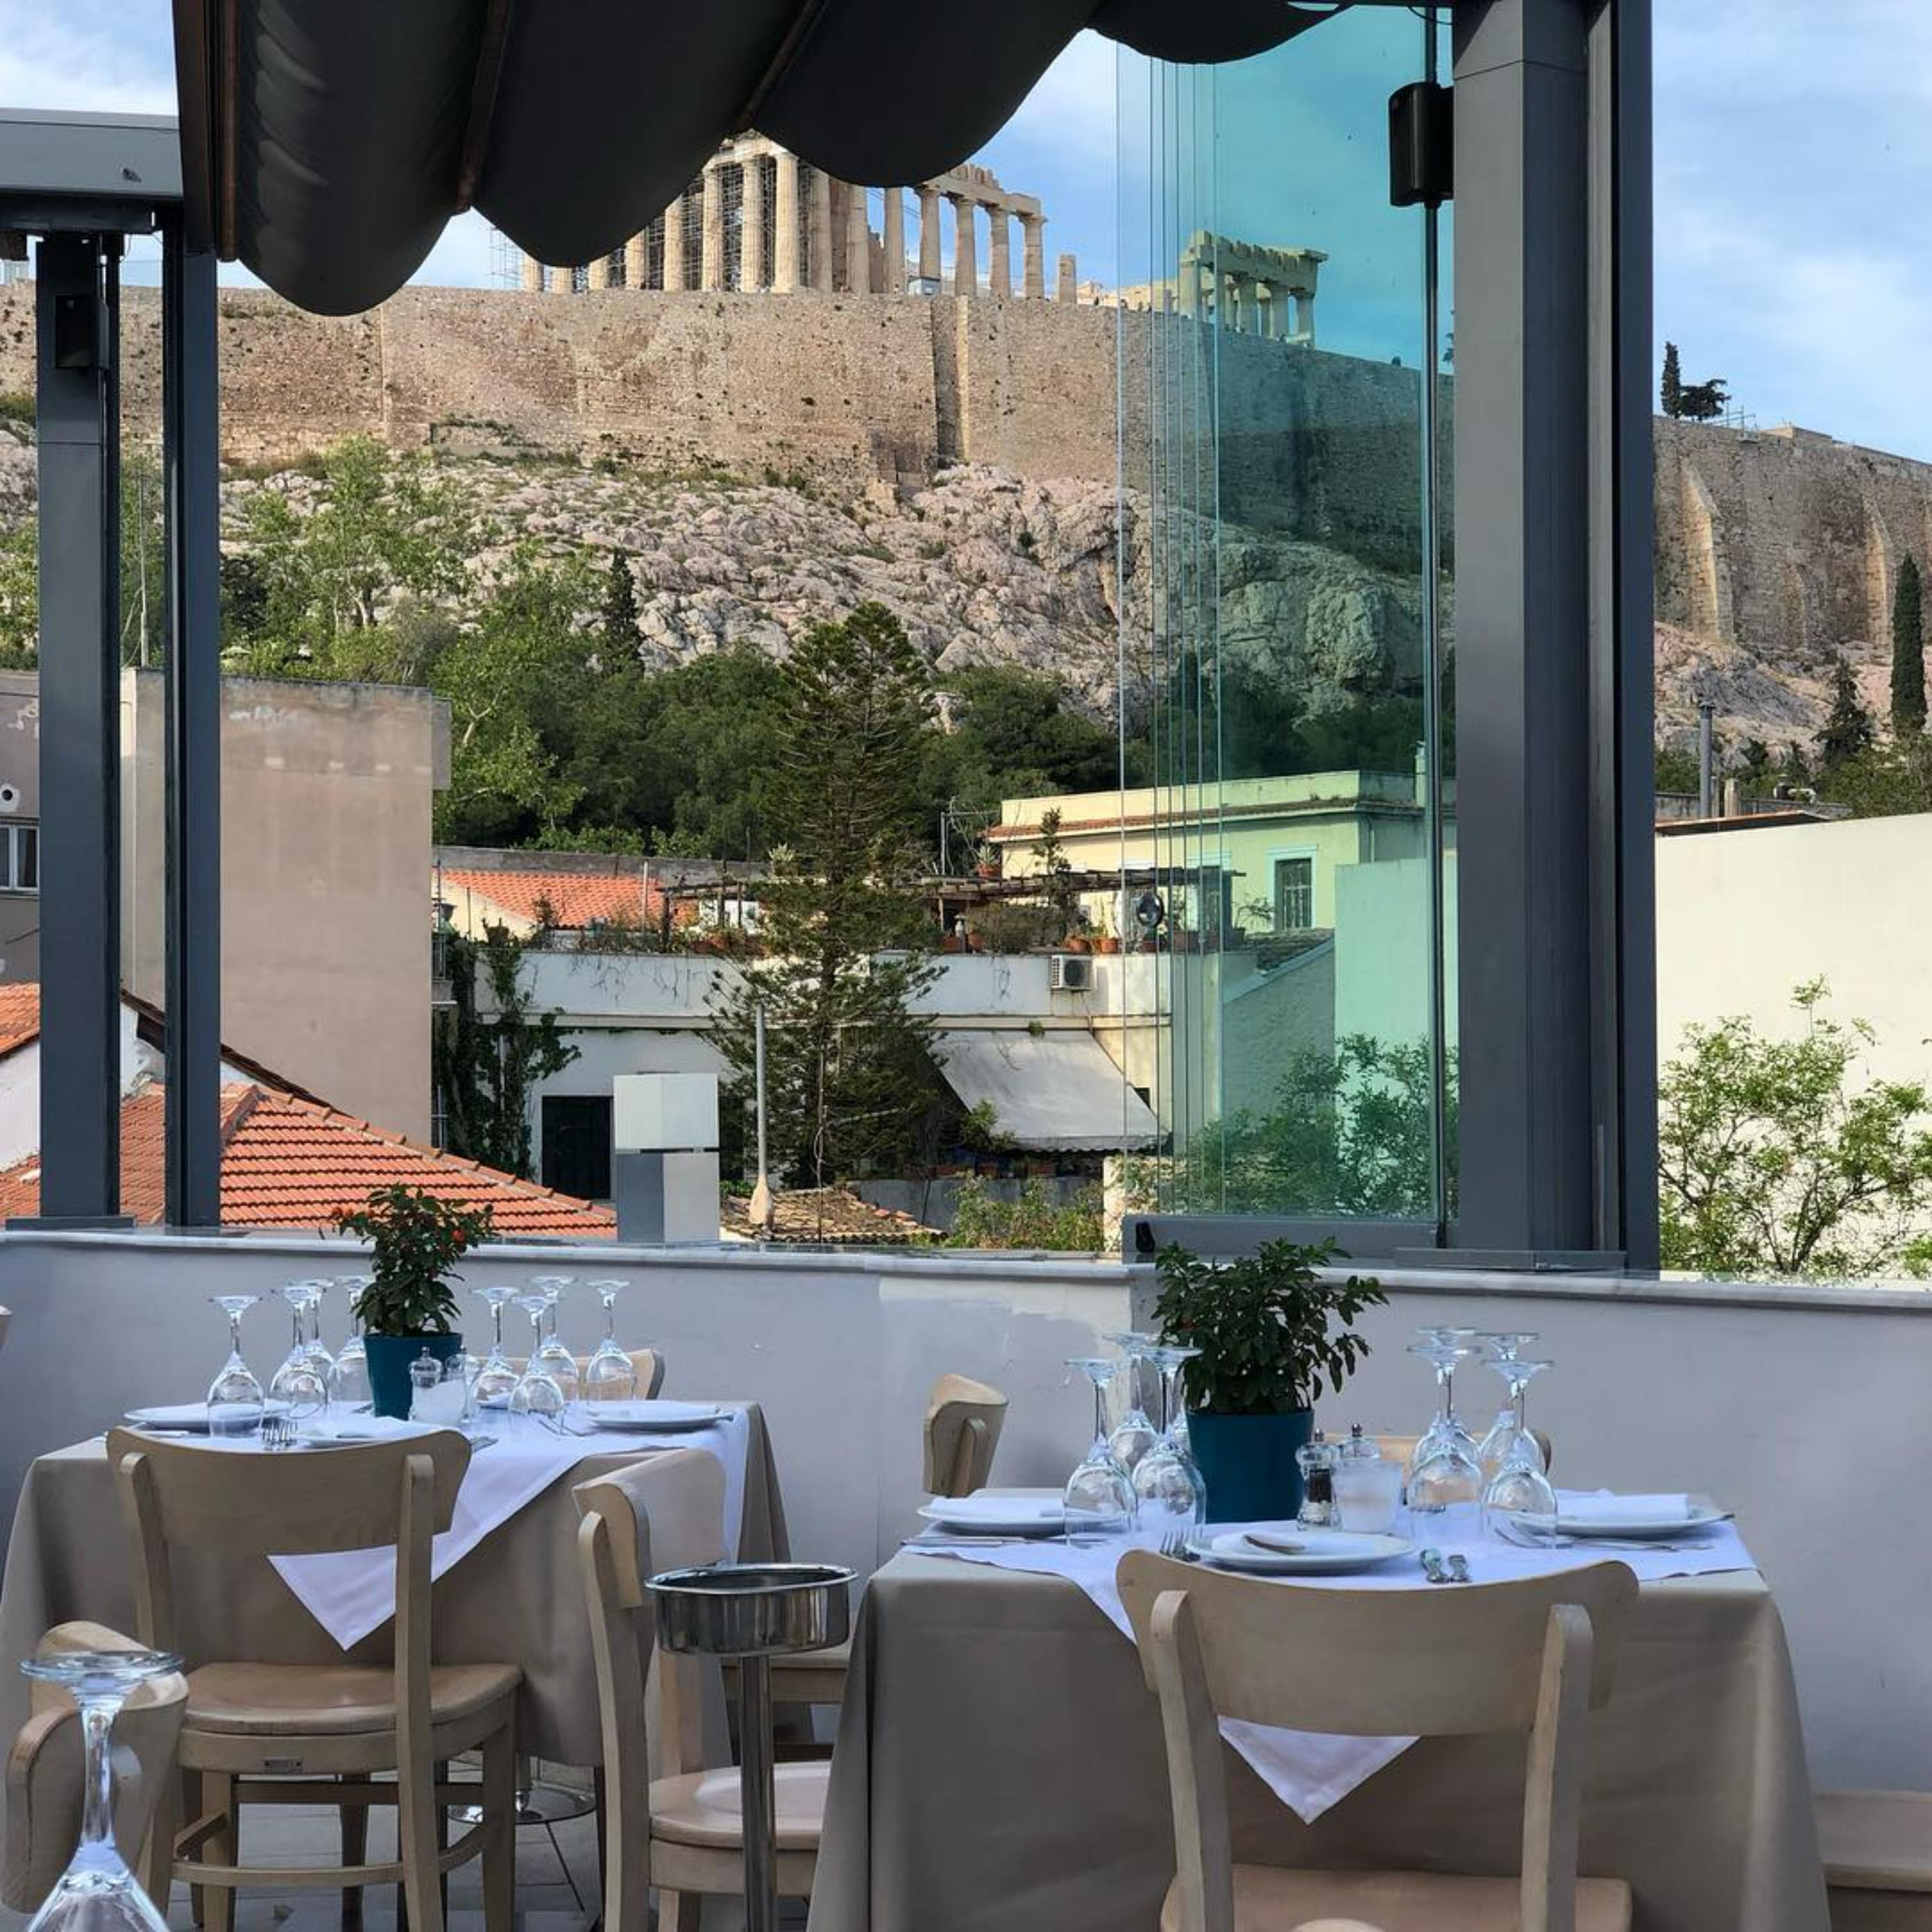 Strofi Athenian Restaurant